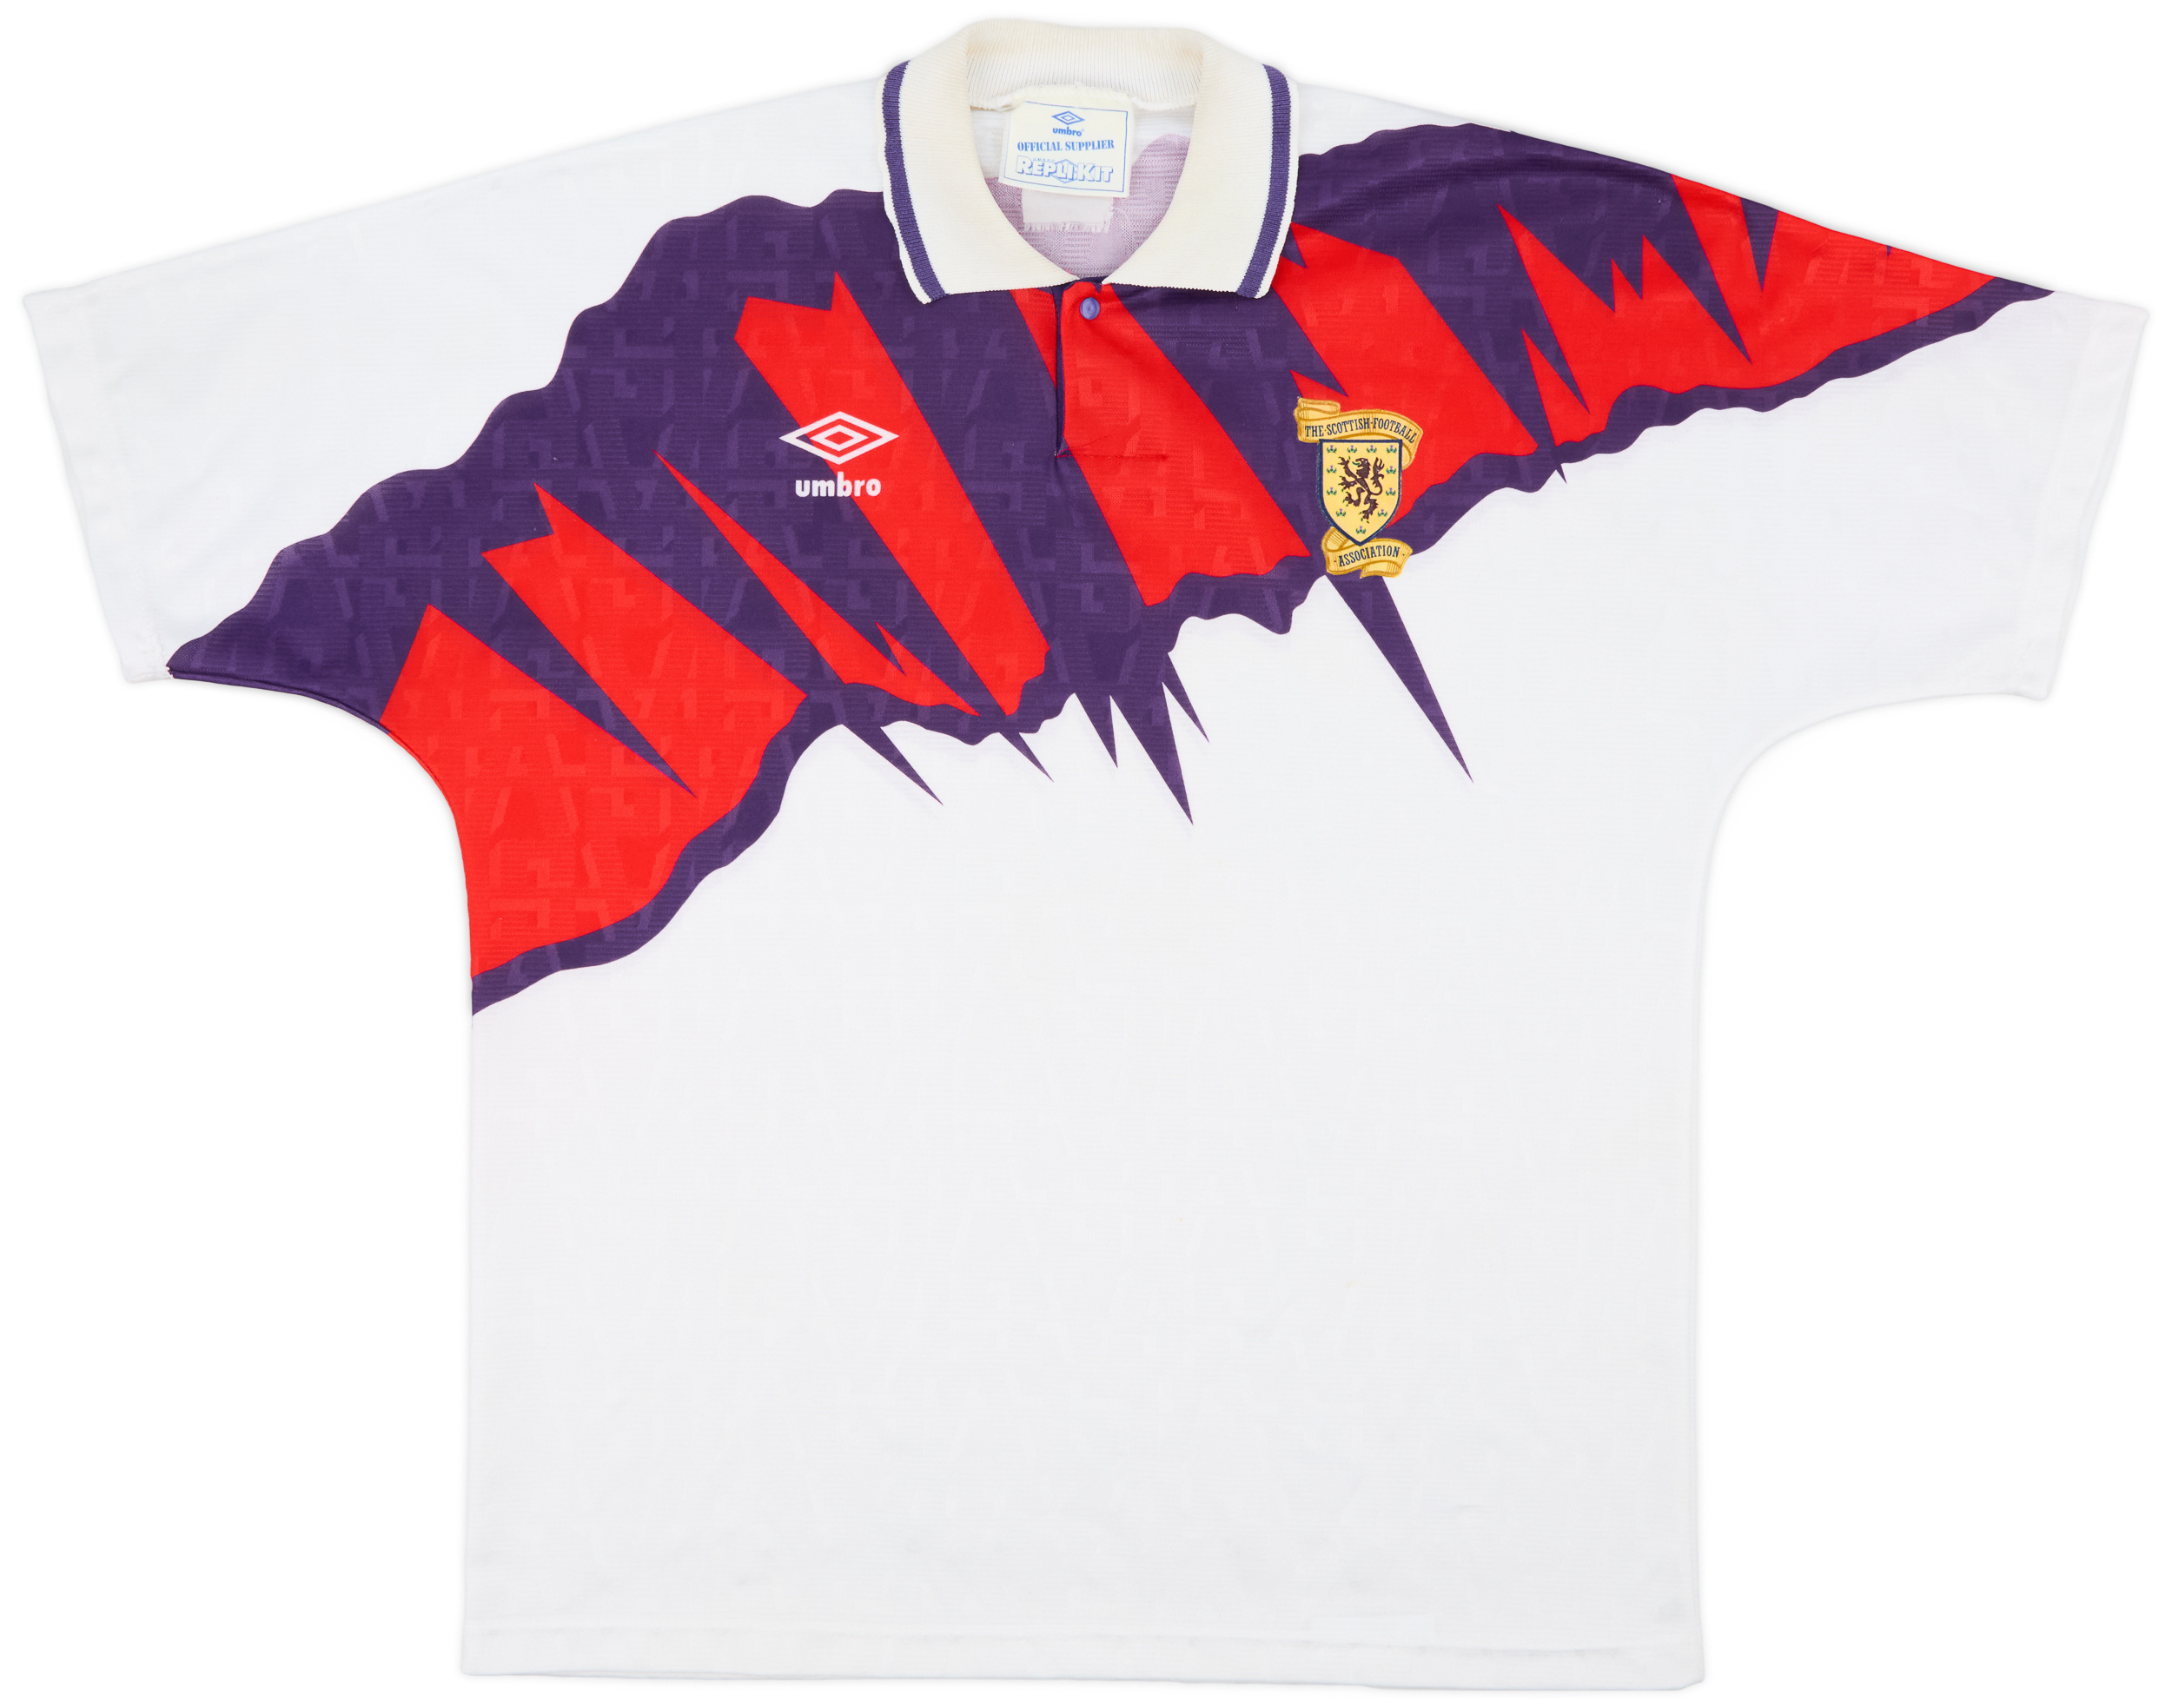 1991-93 Scotland Away Shirt - 7/10 - ()